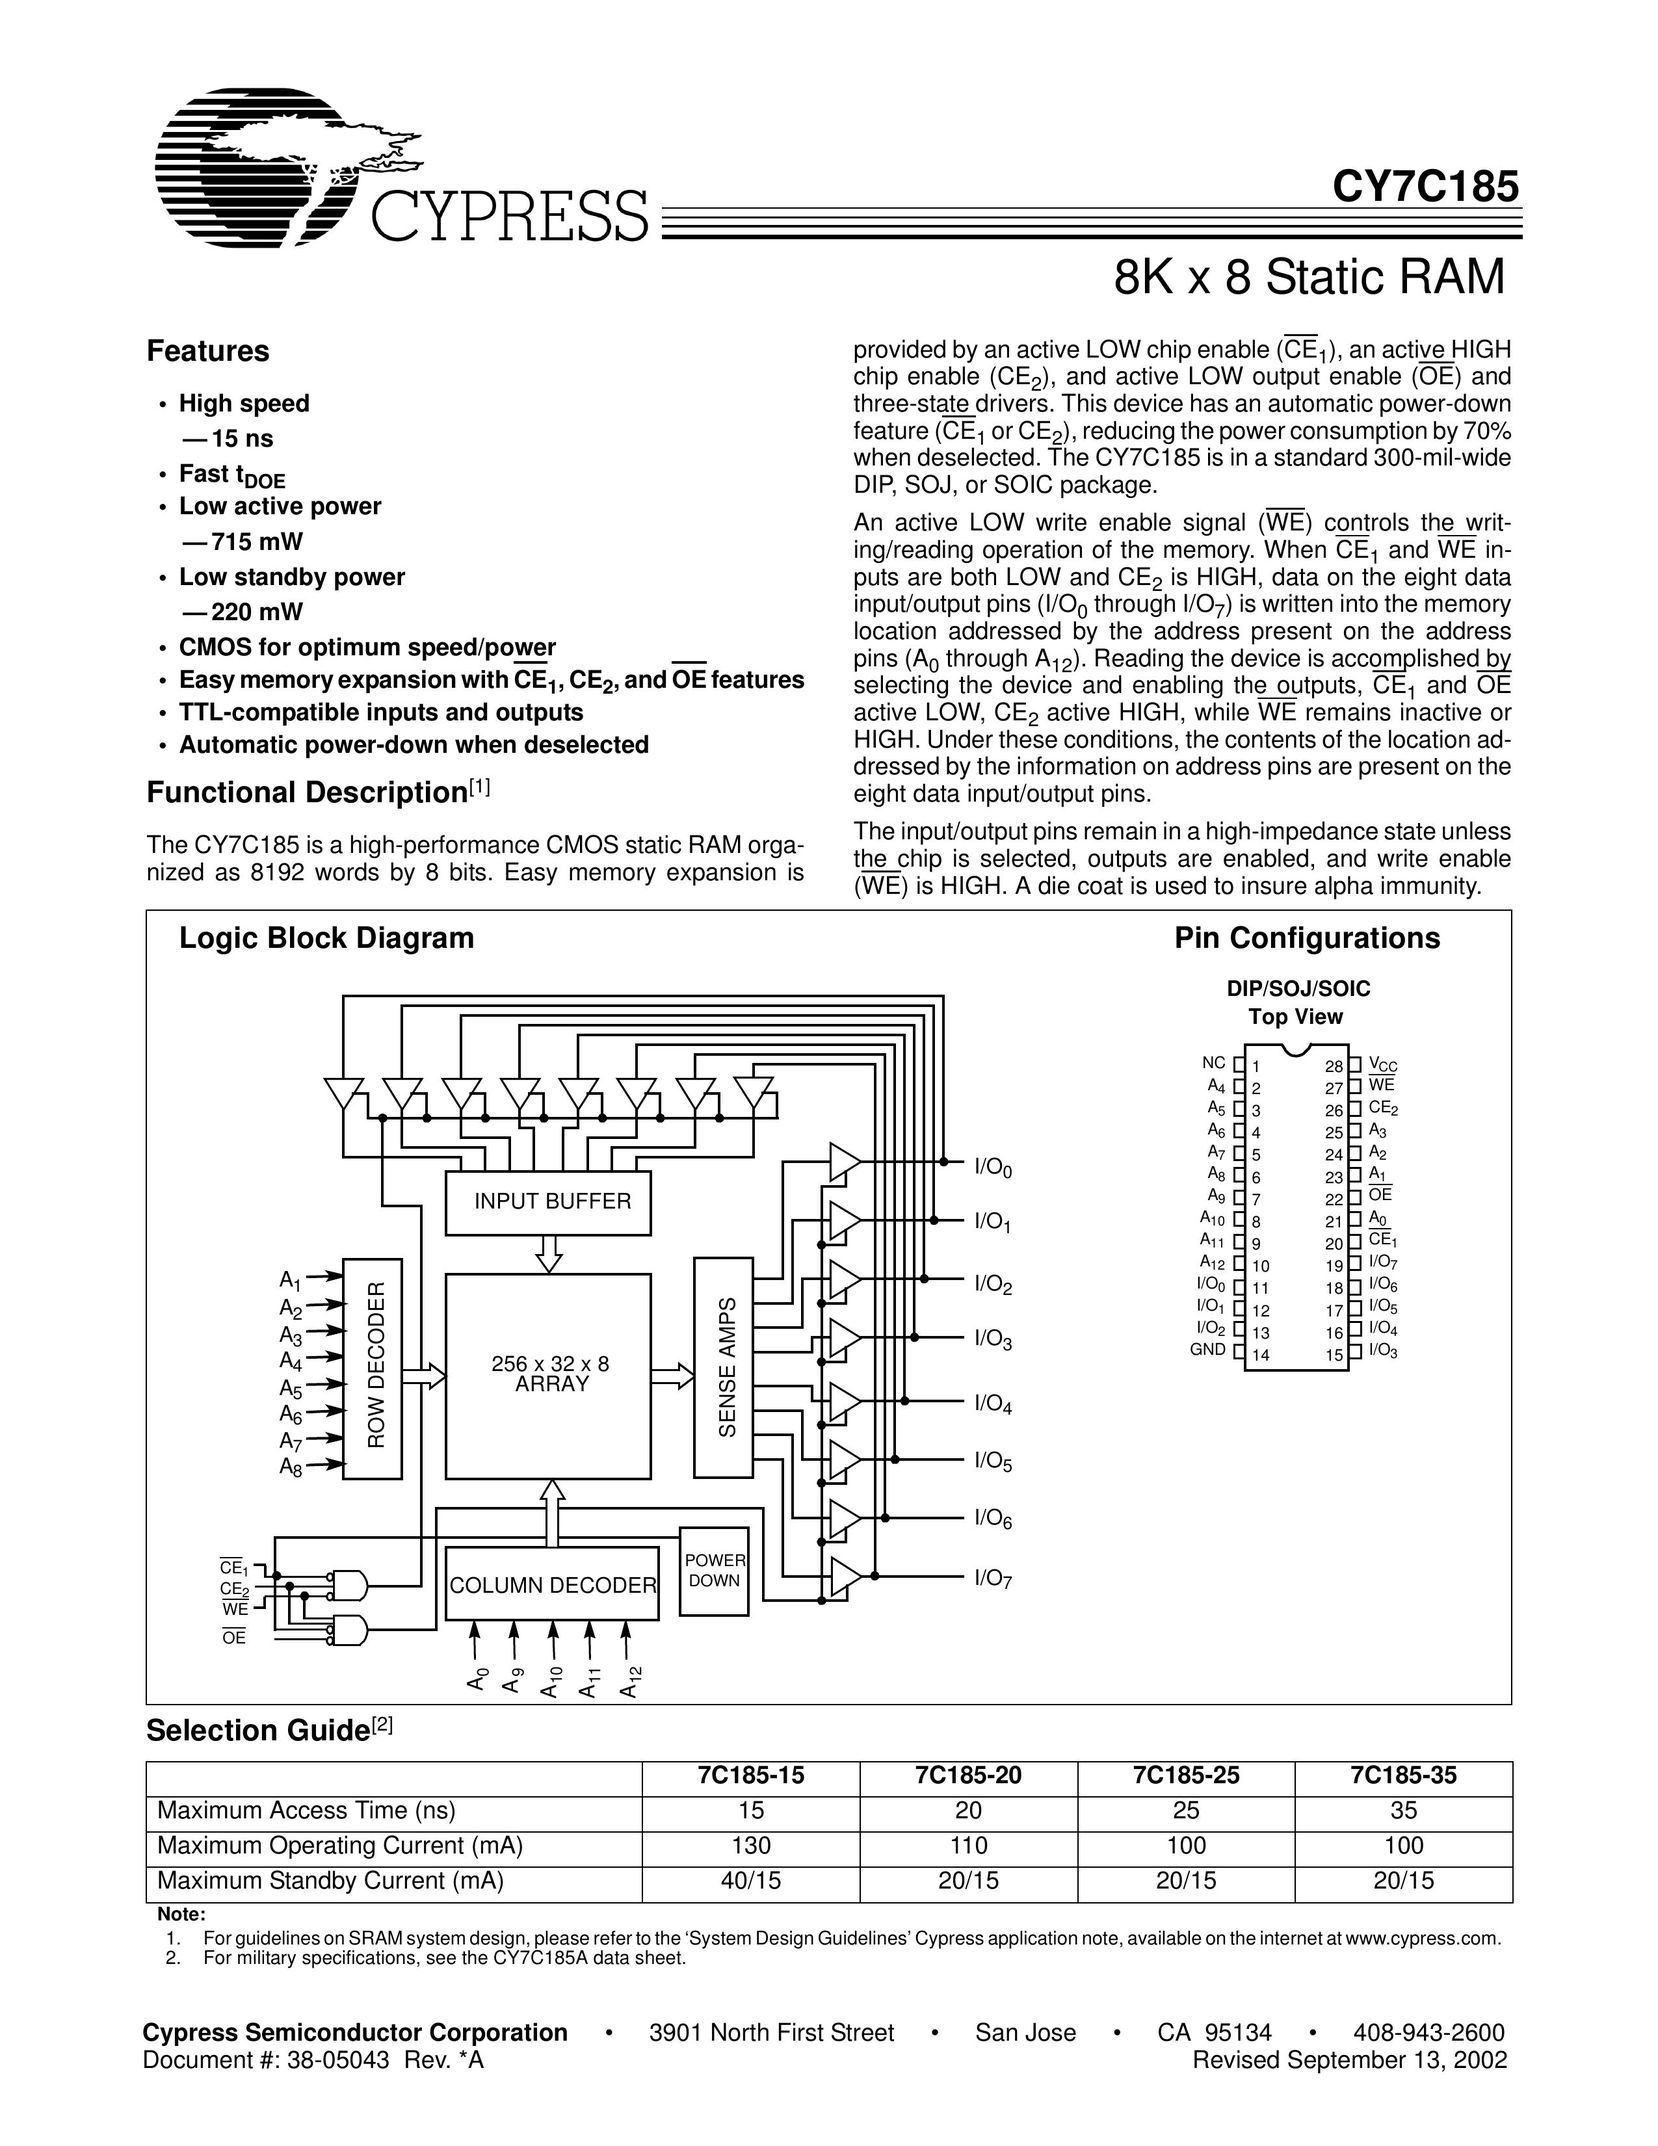 Cypress 7C185-20 Computer Hardware User Manual